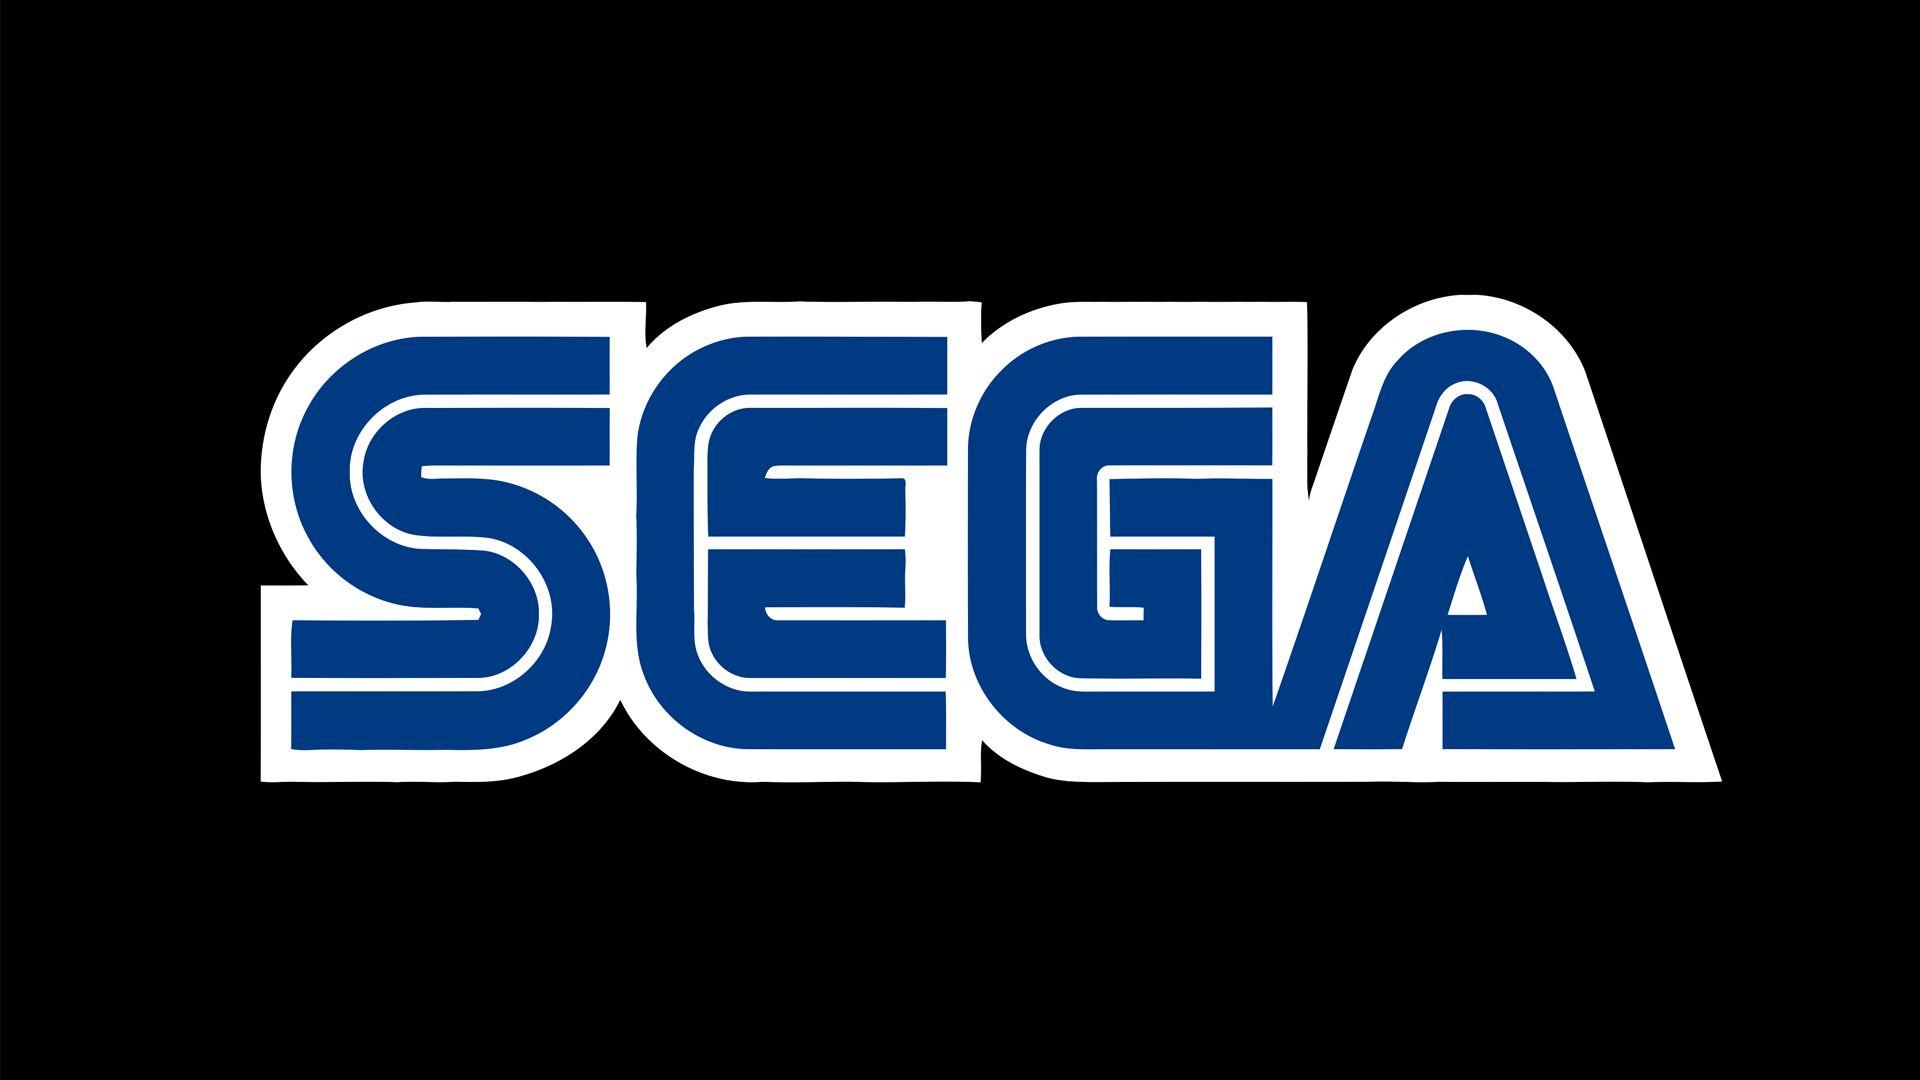 Sega Logo Wallpapers Top Free Sega Logo Backgrounds WallpaperAccess